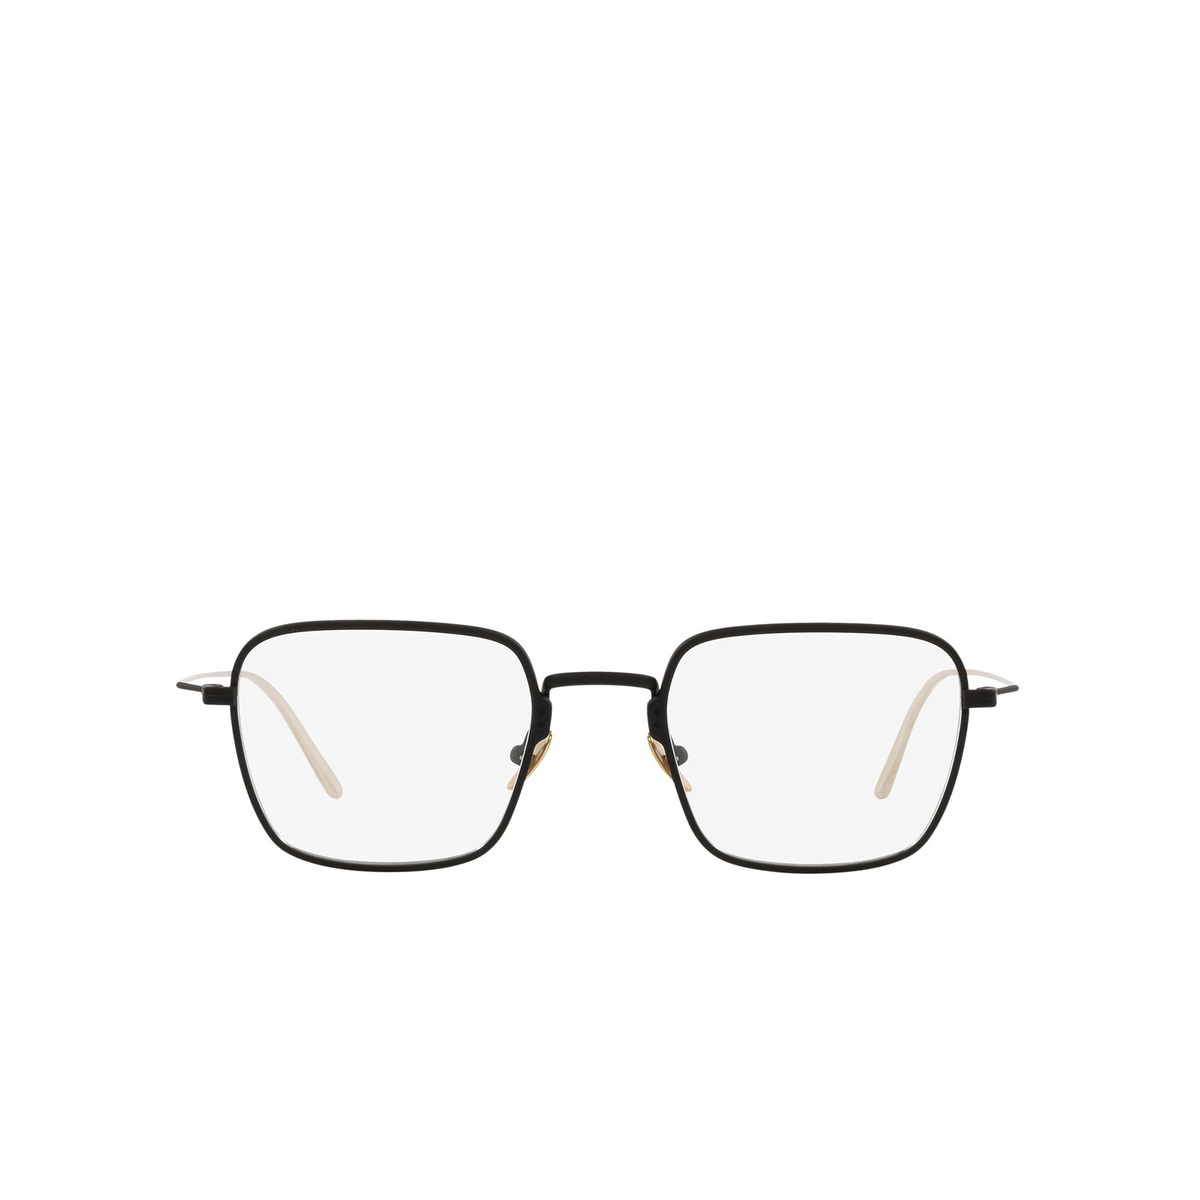 Prada® Square Eyeglasses: PR 51YV color Matte Black 04Q1O1 - front view.